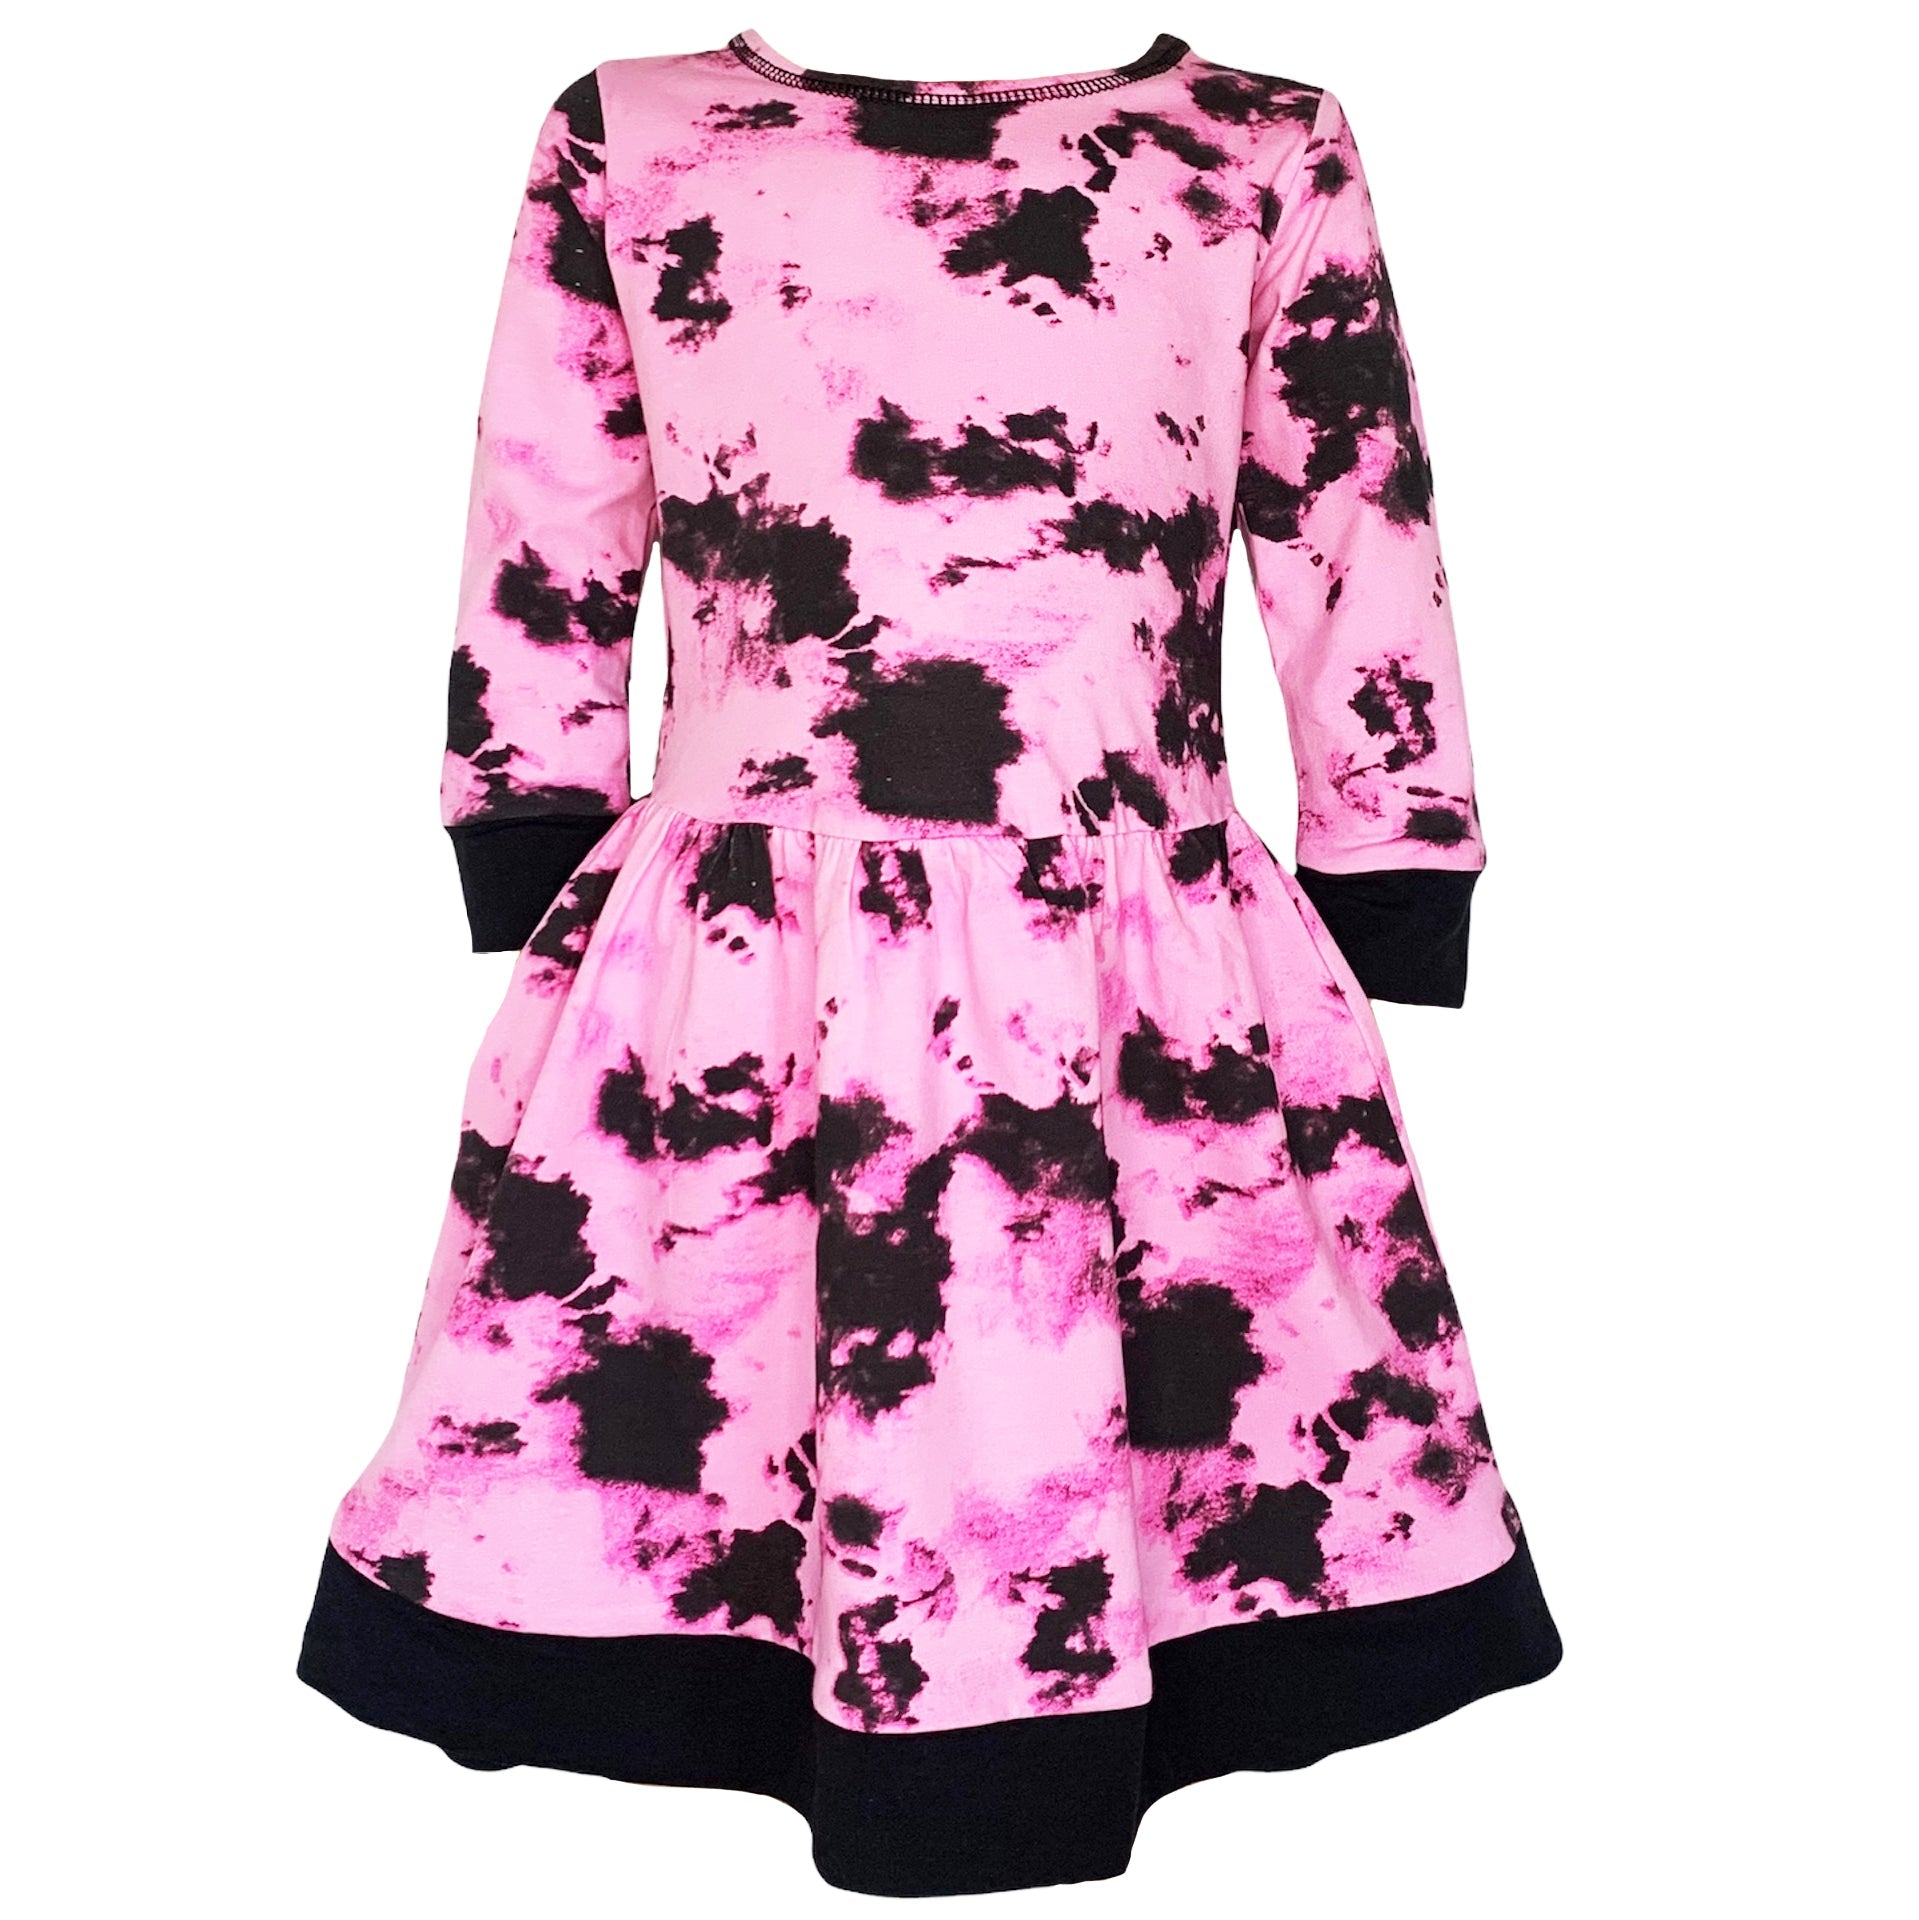 AnnLoren Girls Pink Black White Tie Dye Cotton Dress